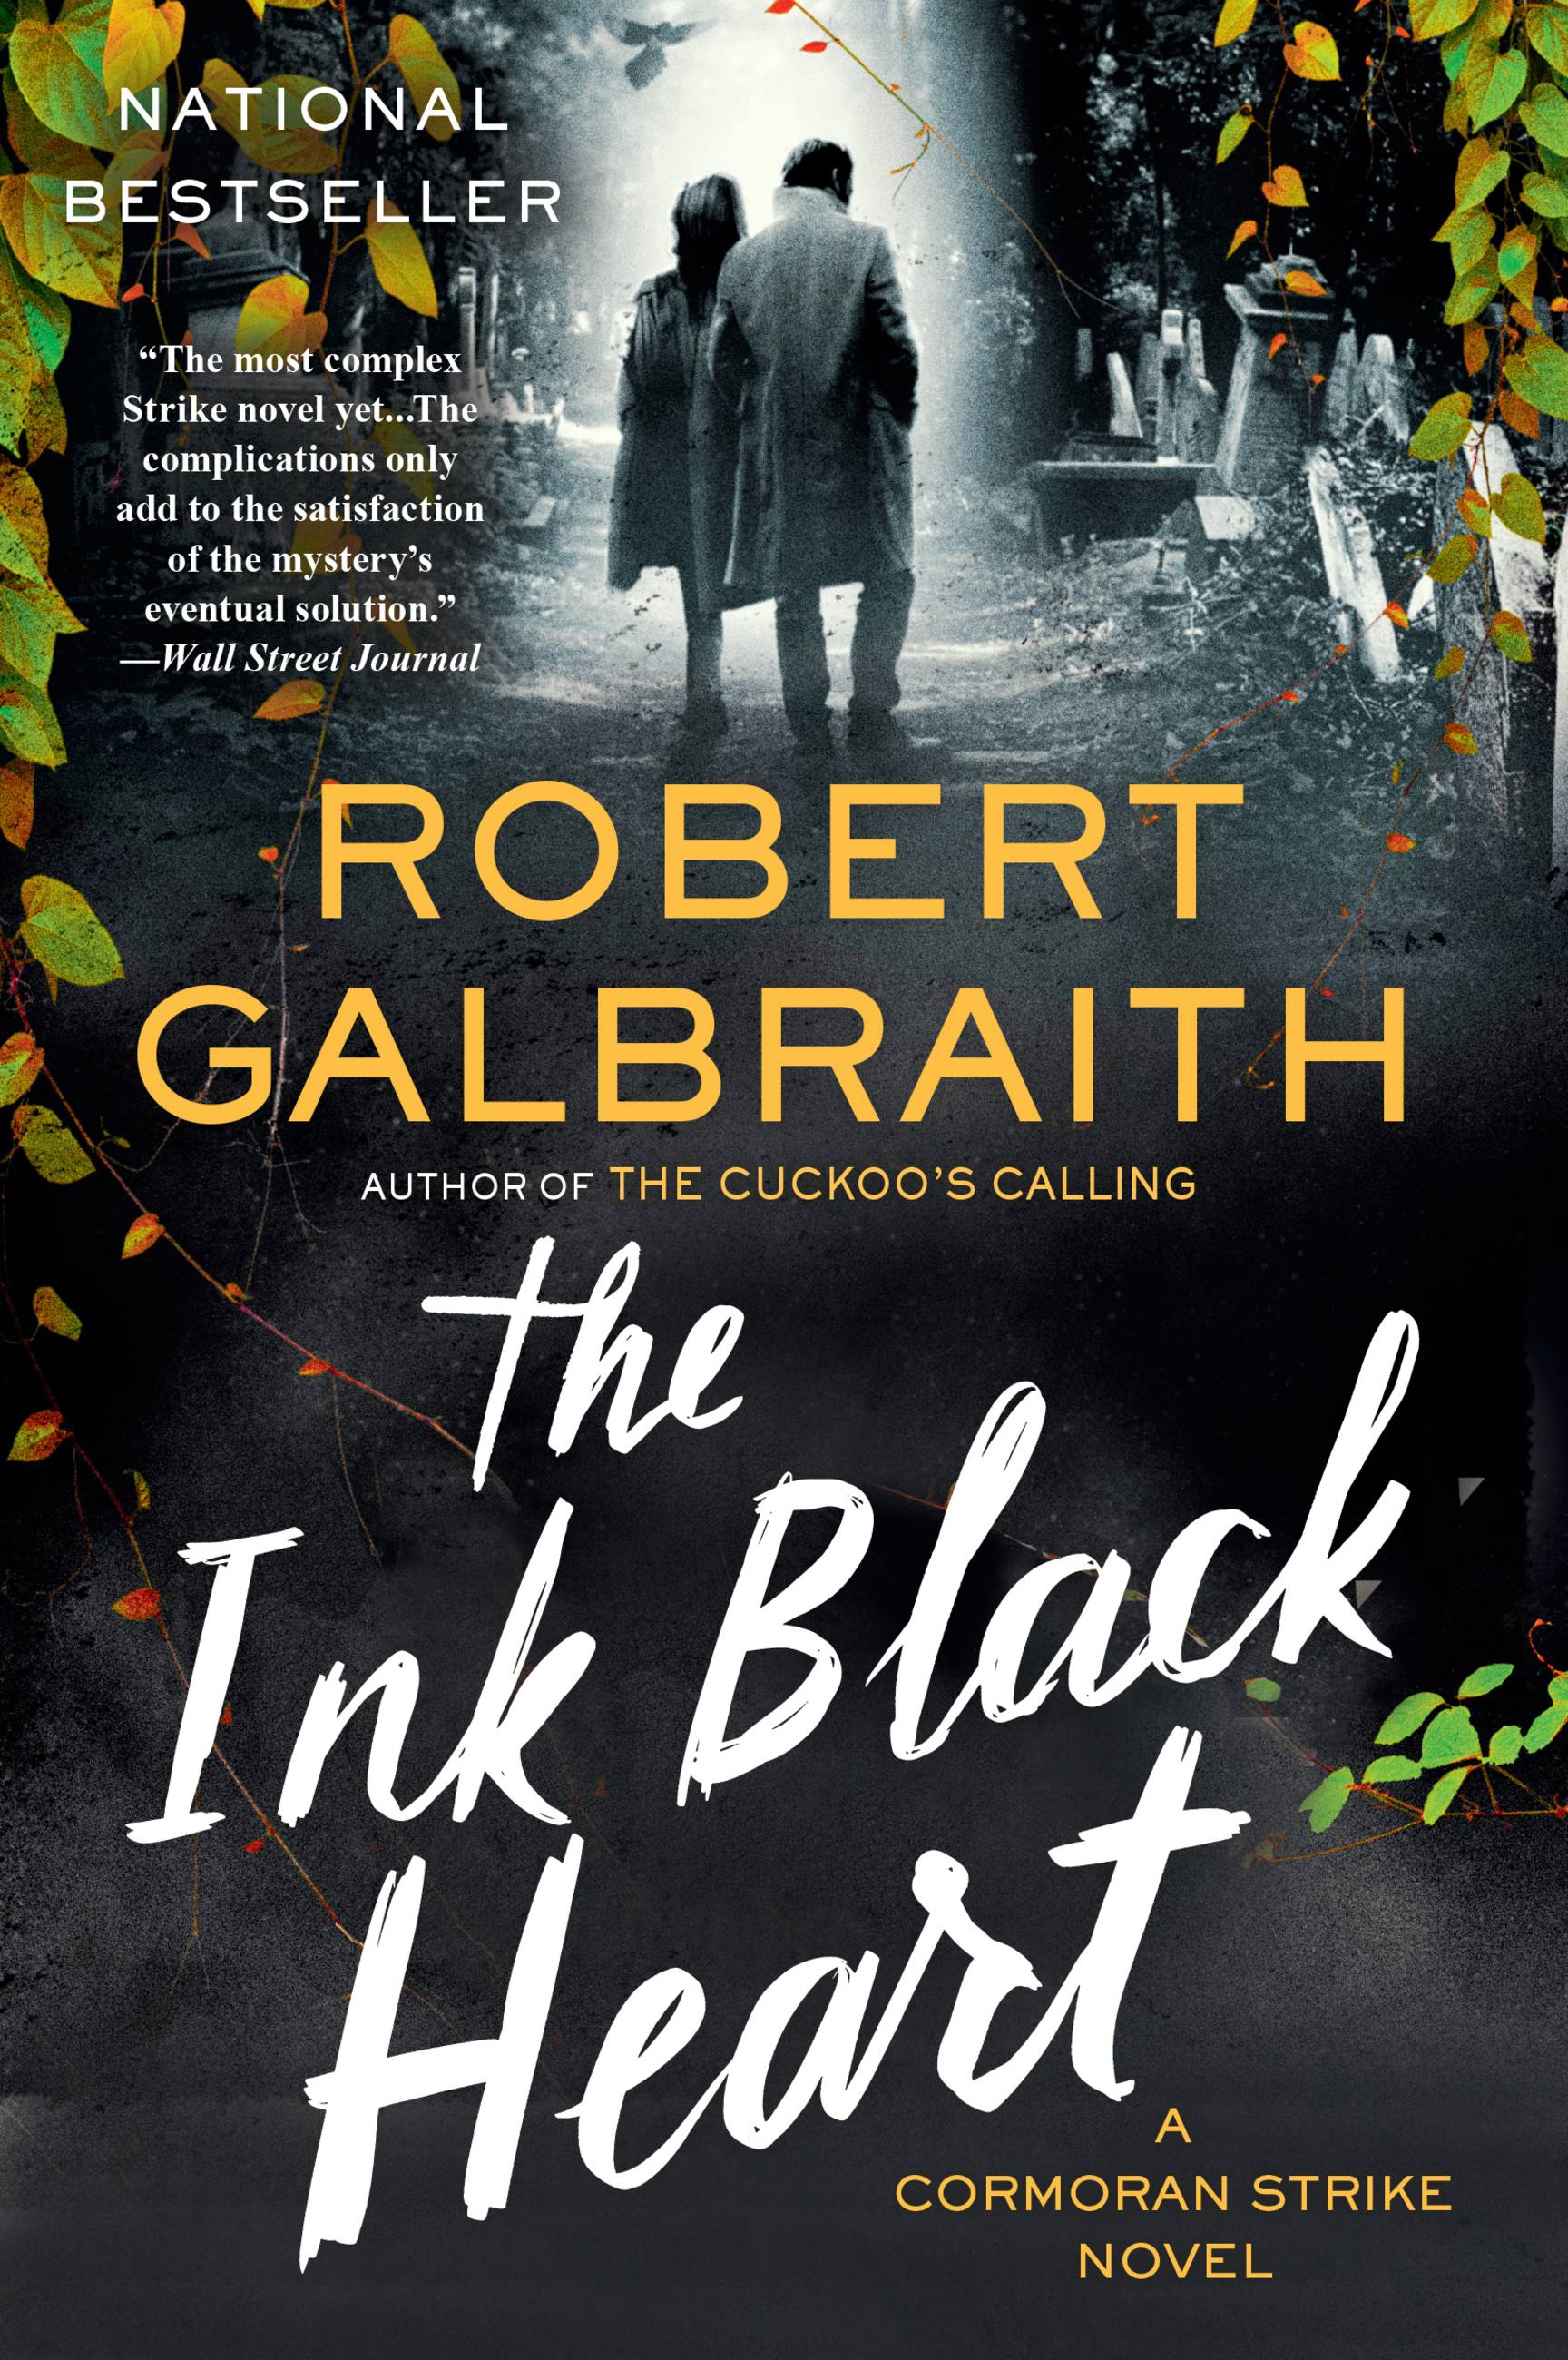 Troubled Blood - (cormoran Strike Novel) By Robert Galbraith (paperback) :  Target